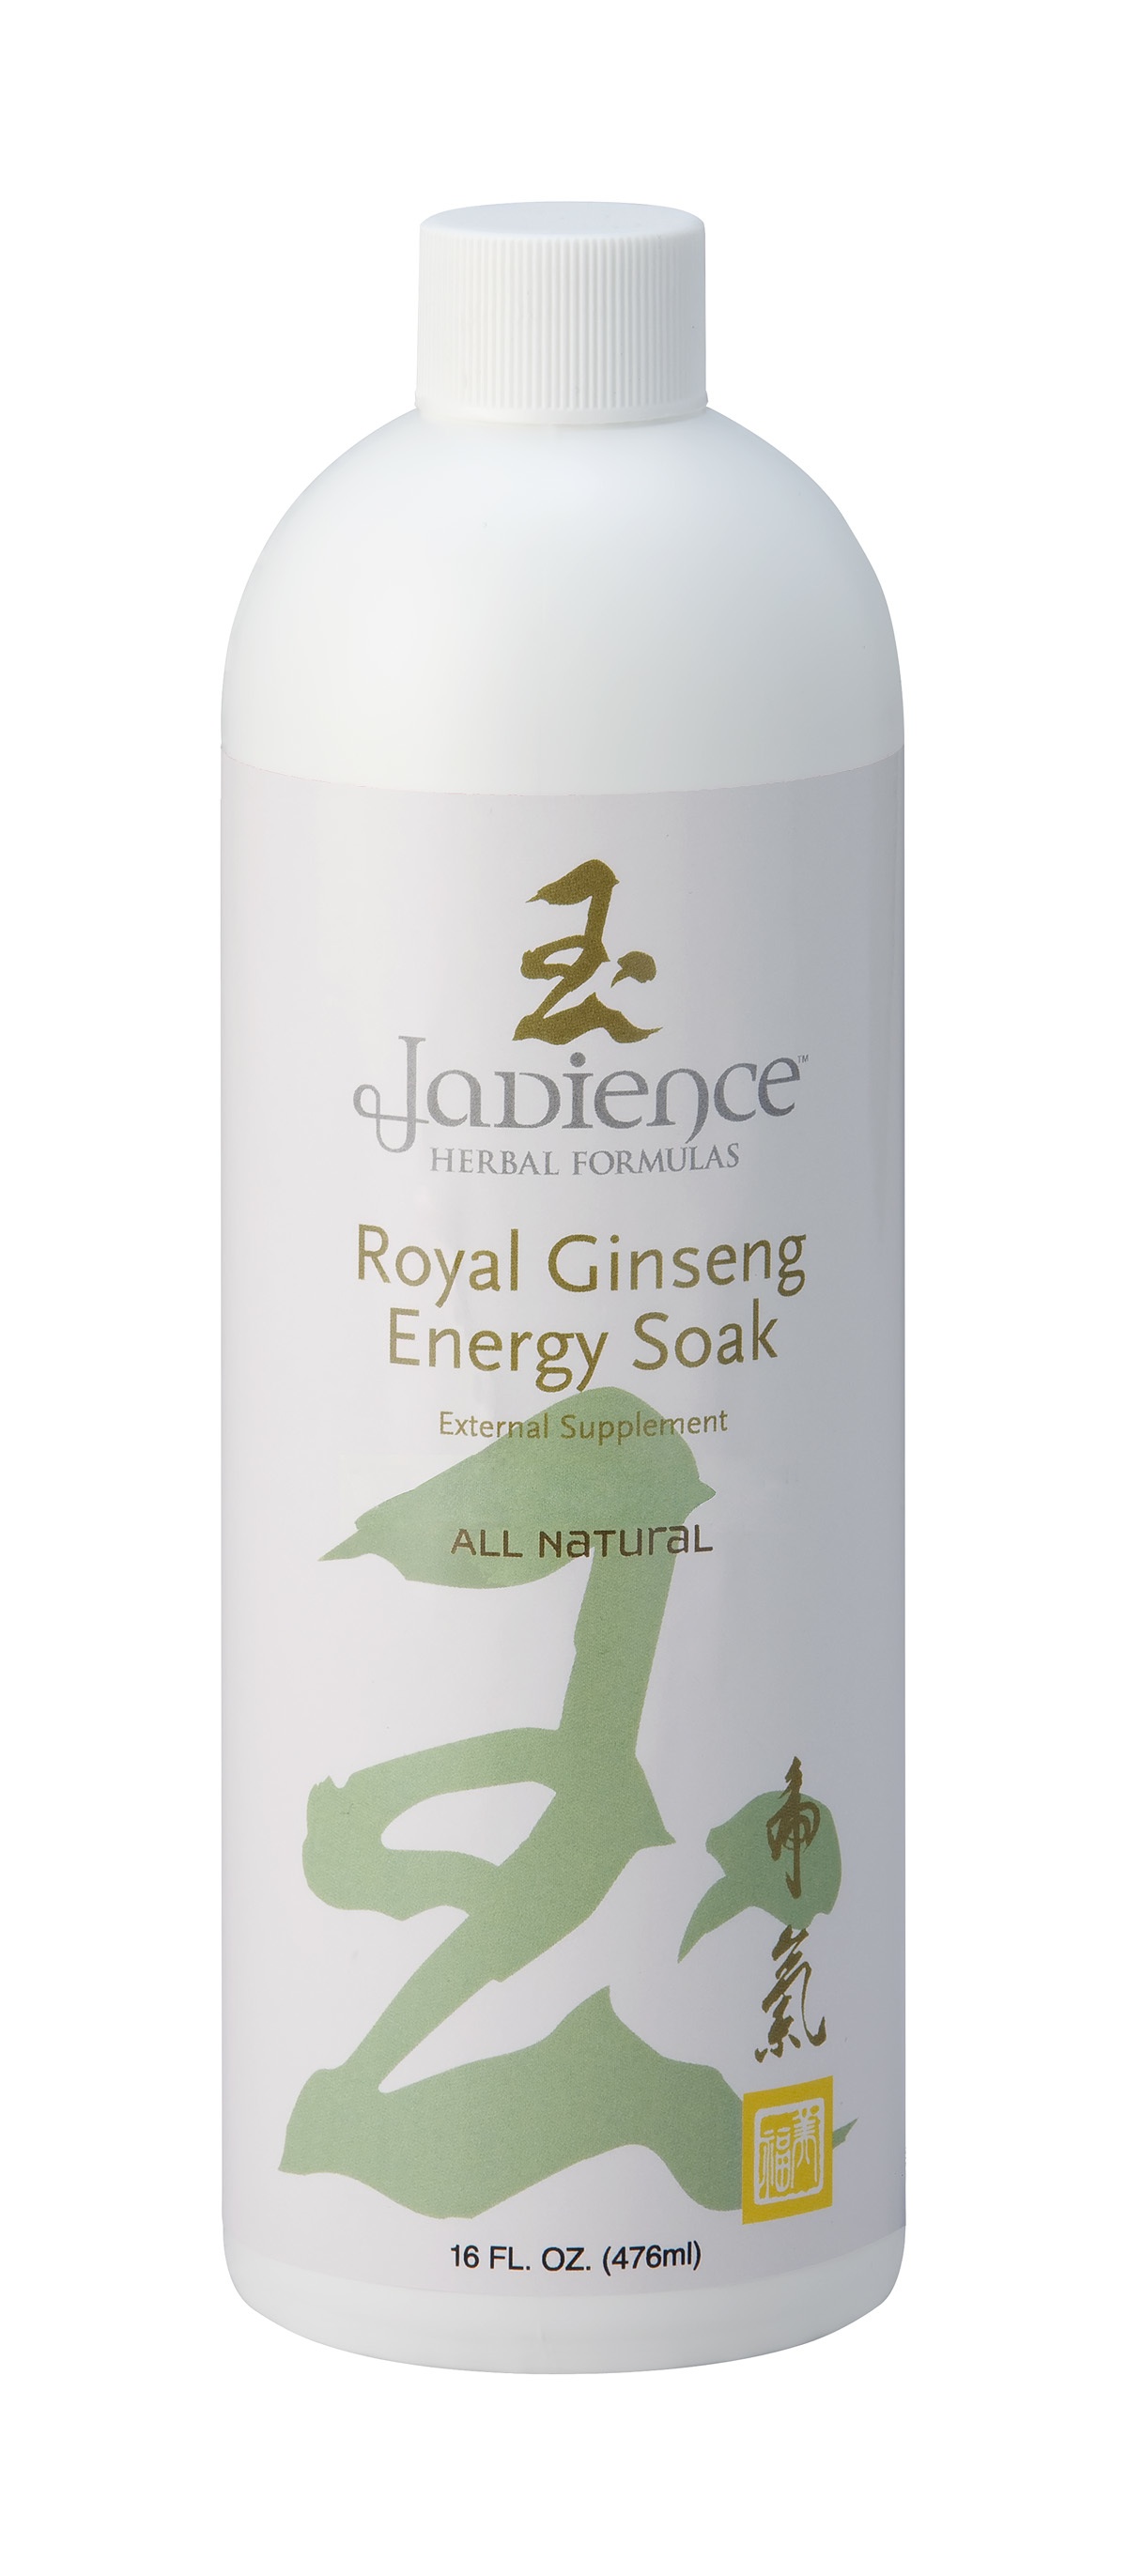 Royal Ginseng Energy Soak, 16 oz